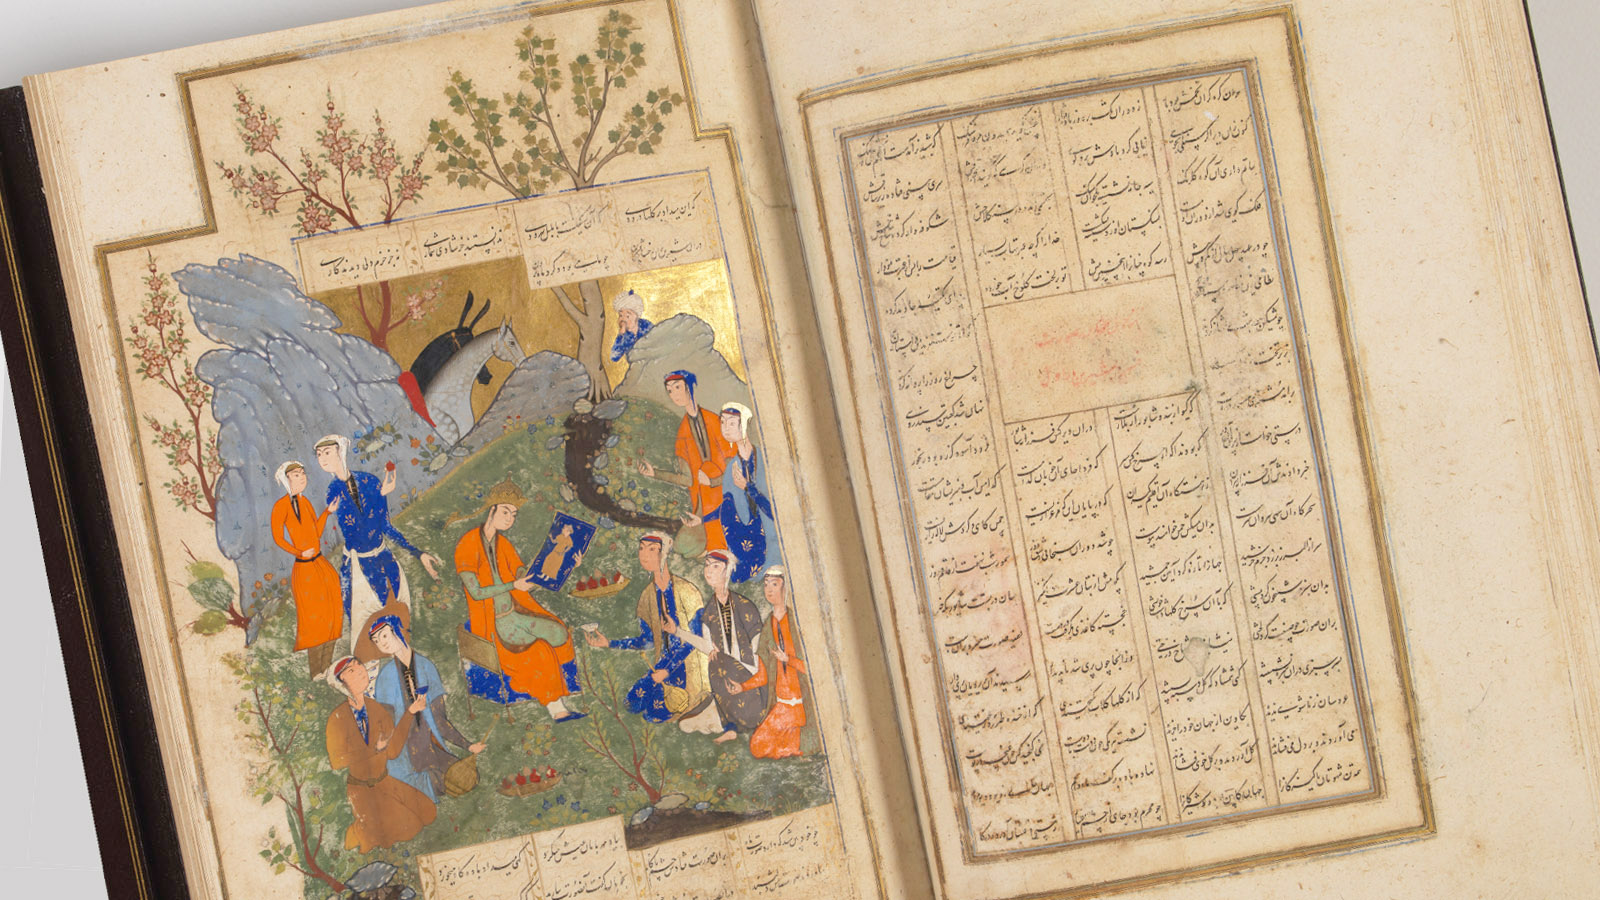 ‘Khamsa’ (Five Poems) by Nizami. Iran, Shiraz, c. 1591. Opaque watercolour, ink and gold on paper, fols. 42v-43r. Calouste Gulbenkian Museum